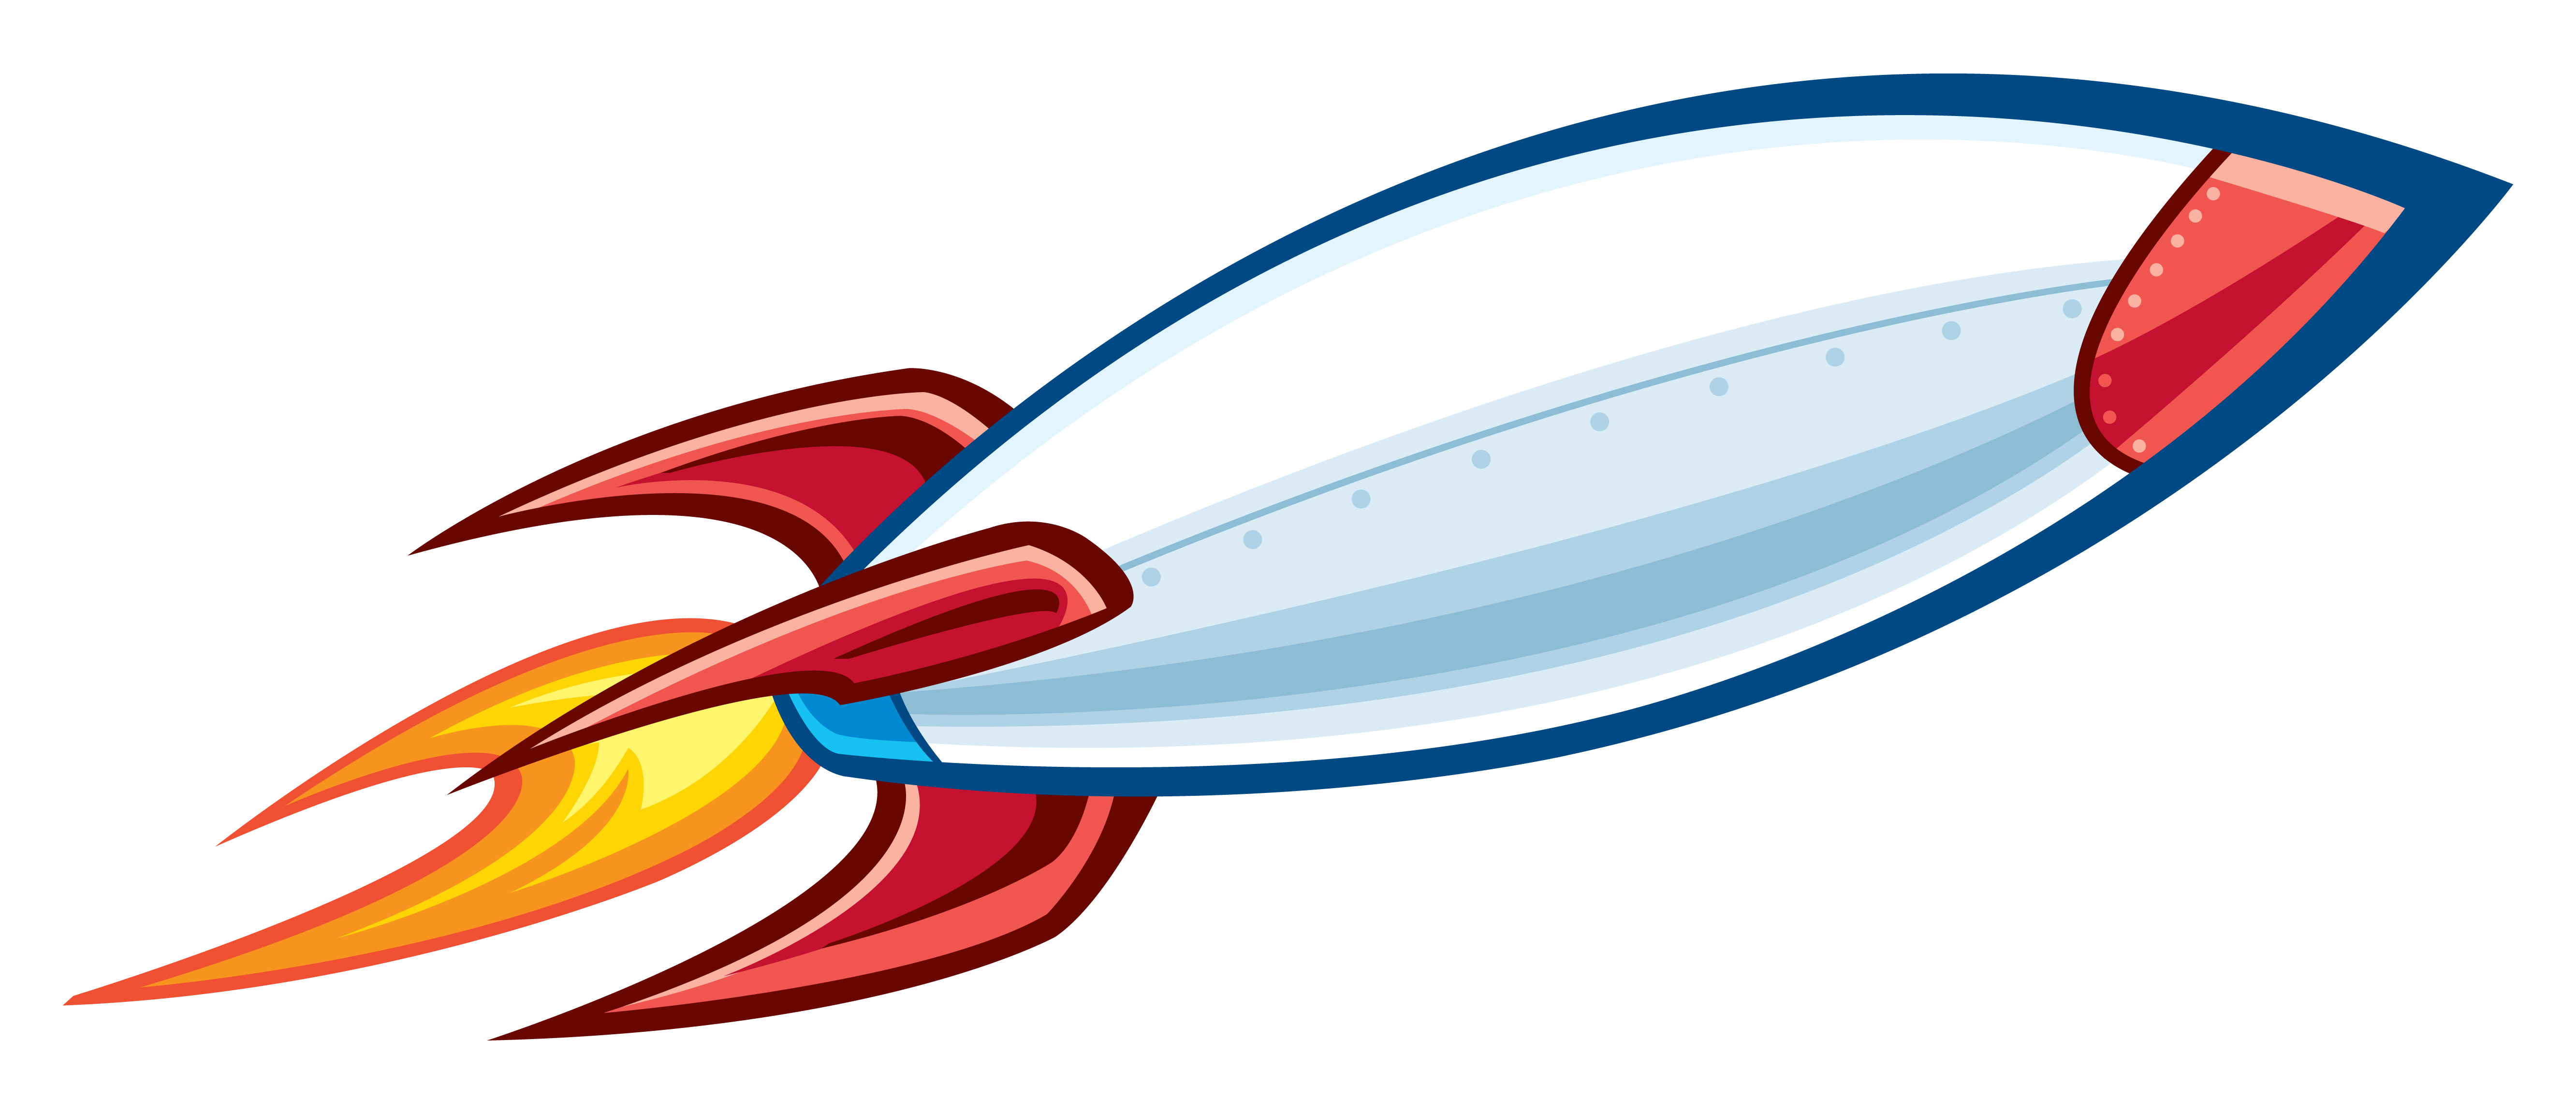 Cartoon Rocket Launch | Free Download Clip Art | Free Clip Art ...